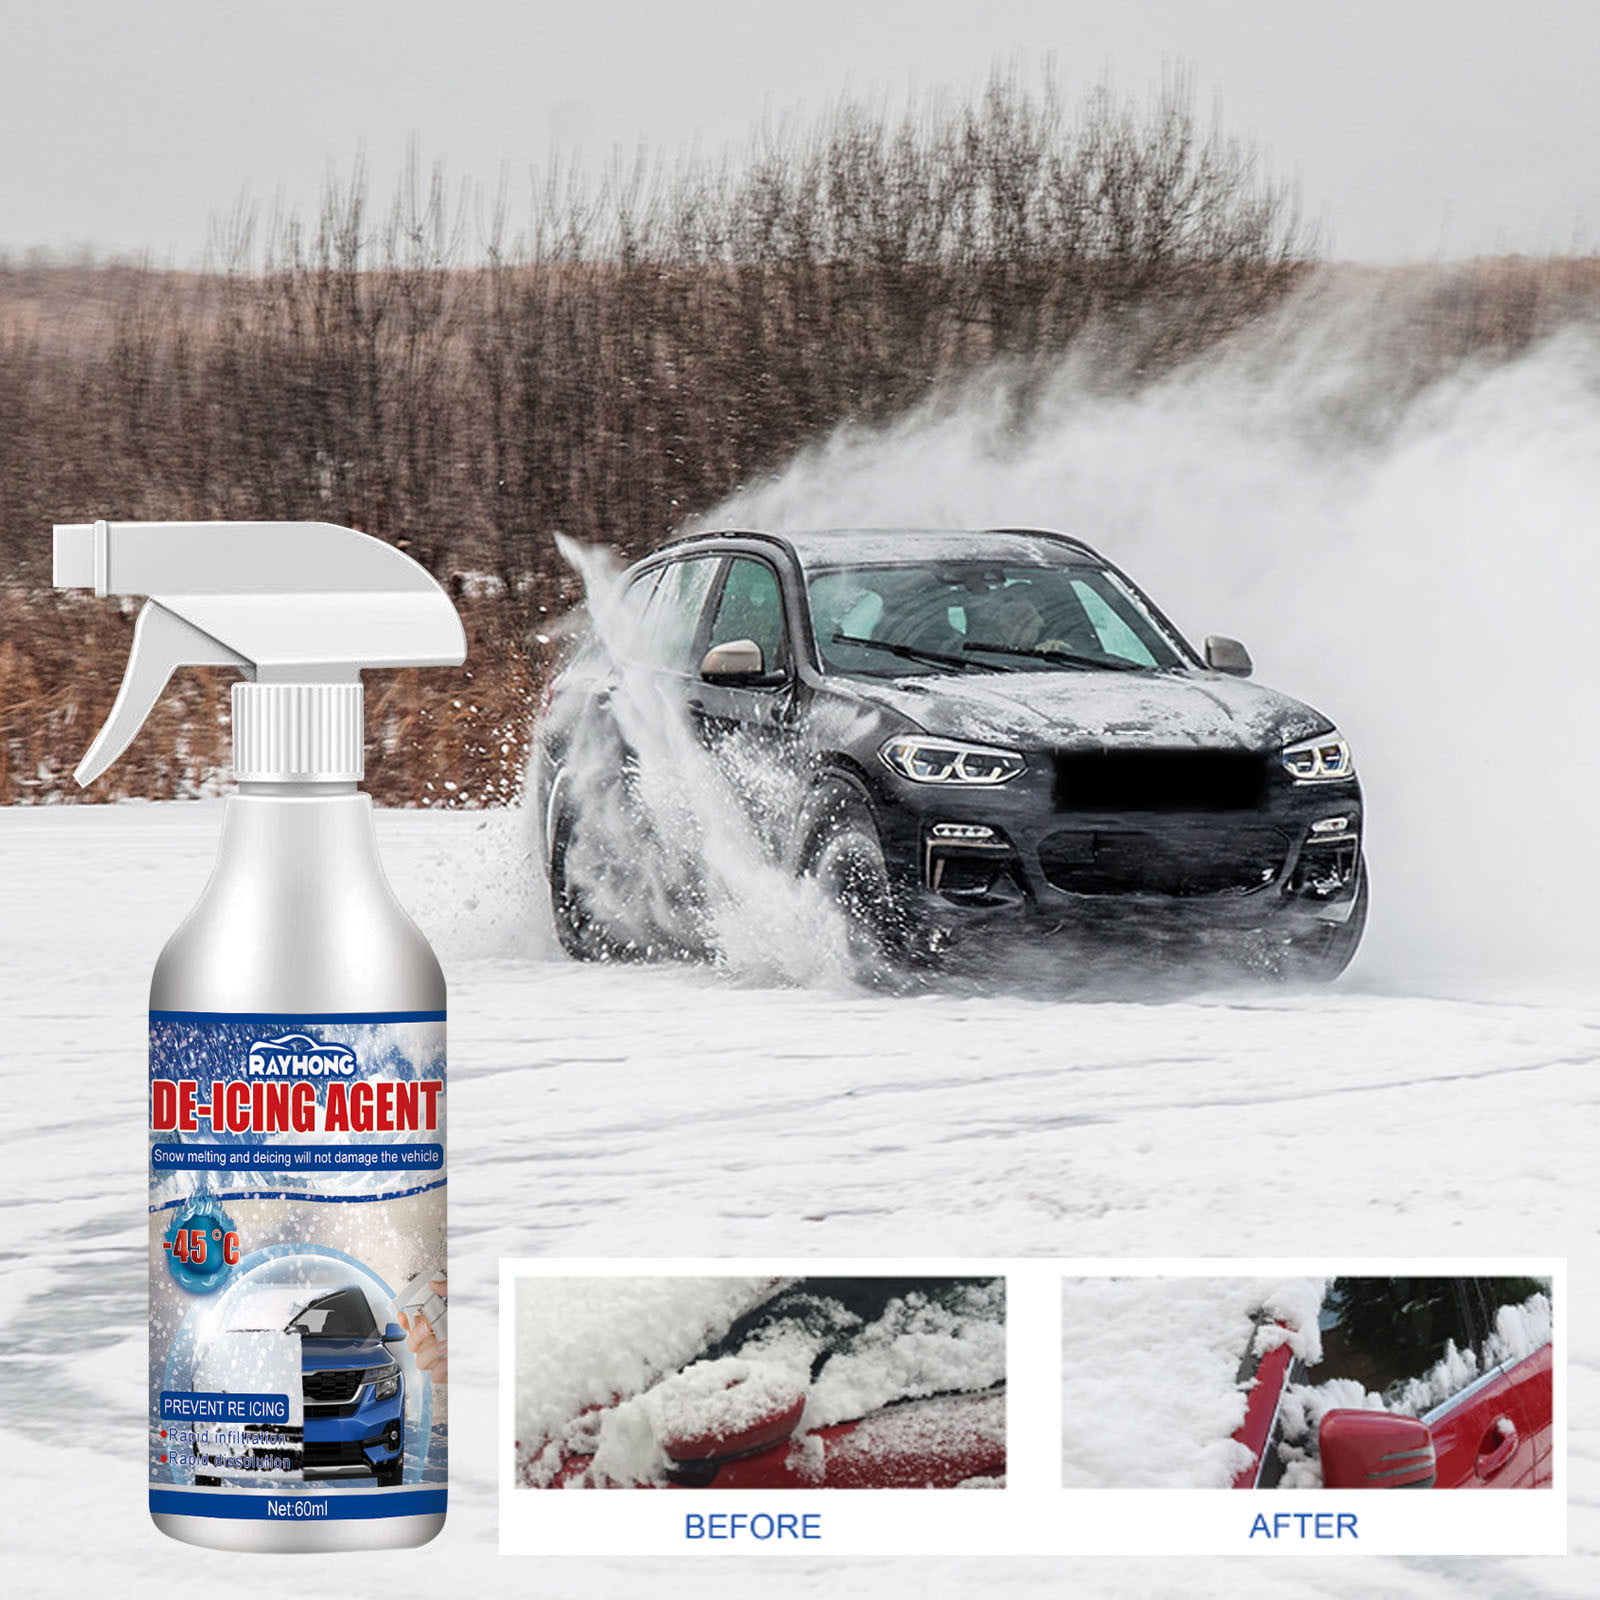 Rayhong Car Snow Removal Spray Car De-icer Spray Car Windshield Window  Quick Defrost Snow Melting Ice Spray Artifact 100ml